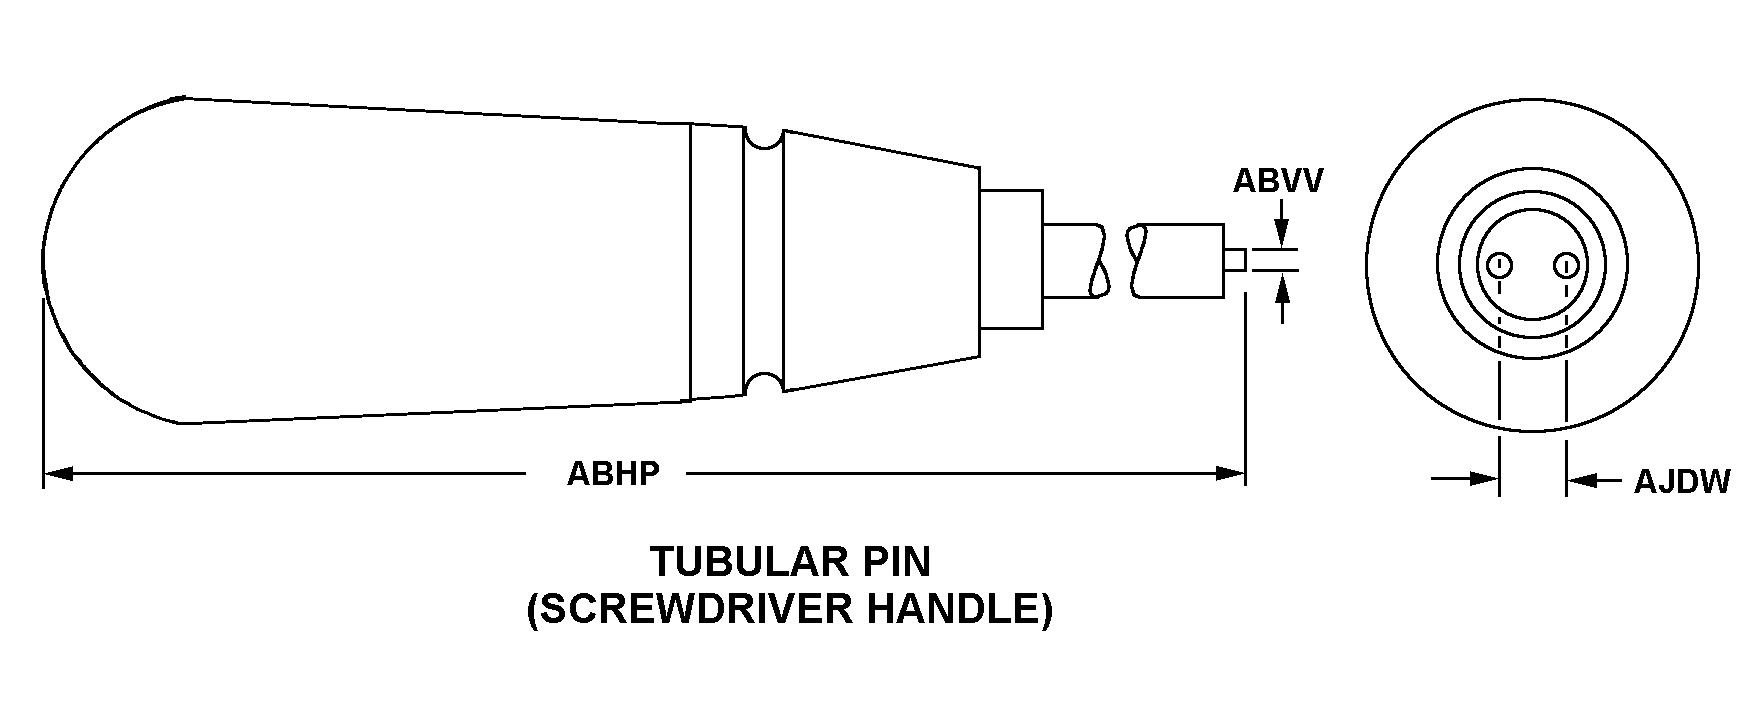 TUBULAR PIN style nsn 5120-00-177-9215